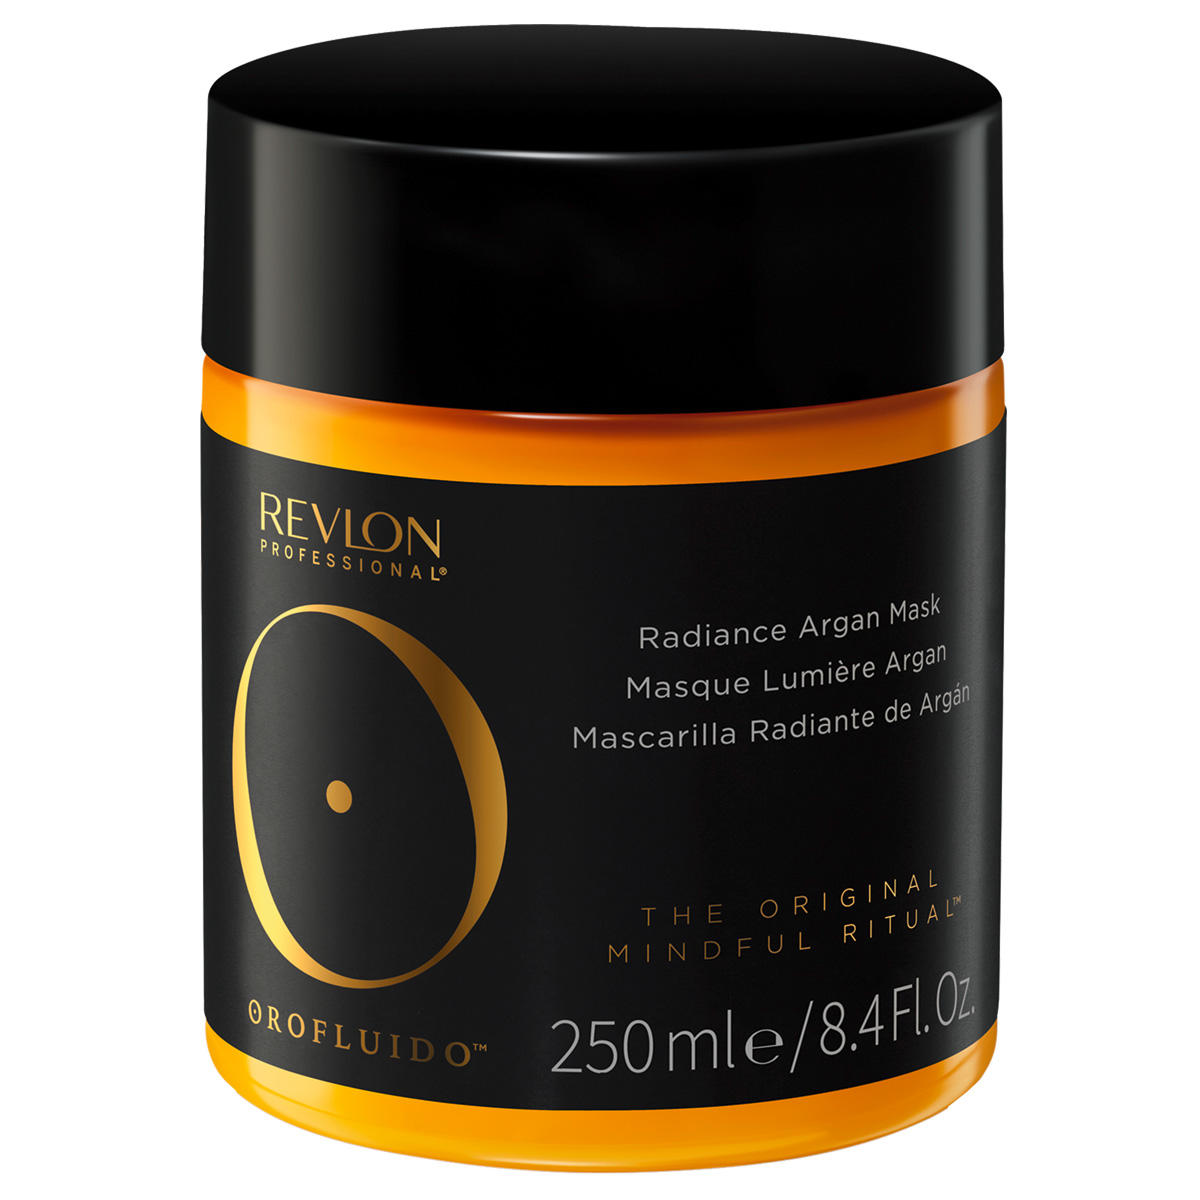 Revlon Professional OROFLUIDO Radiance Argan Mask 250 ml